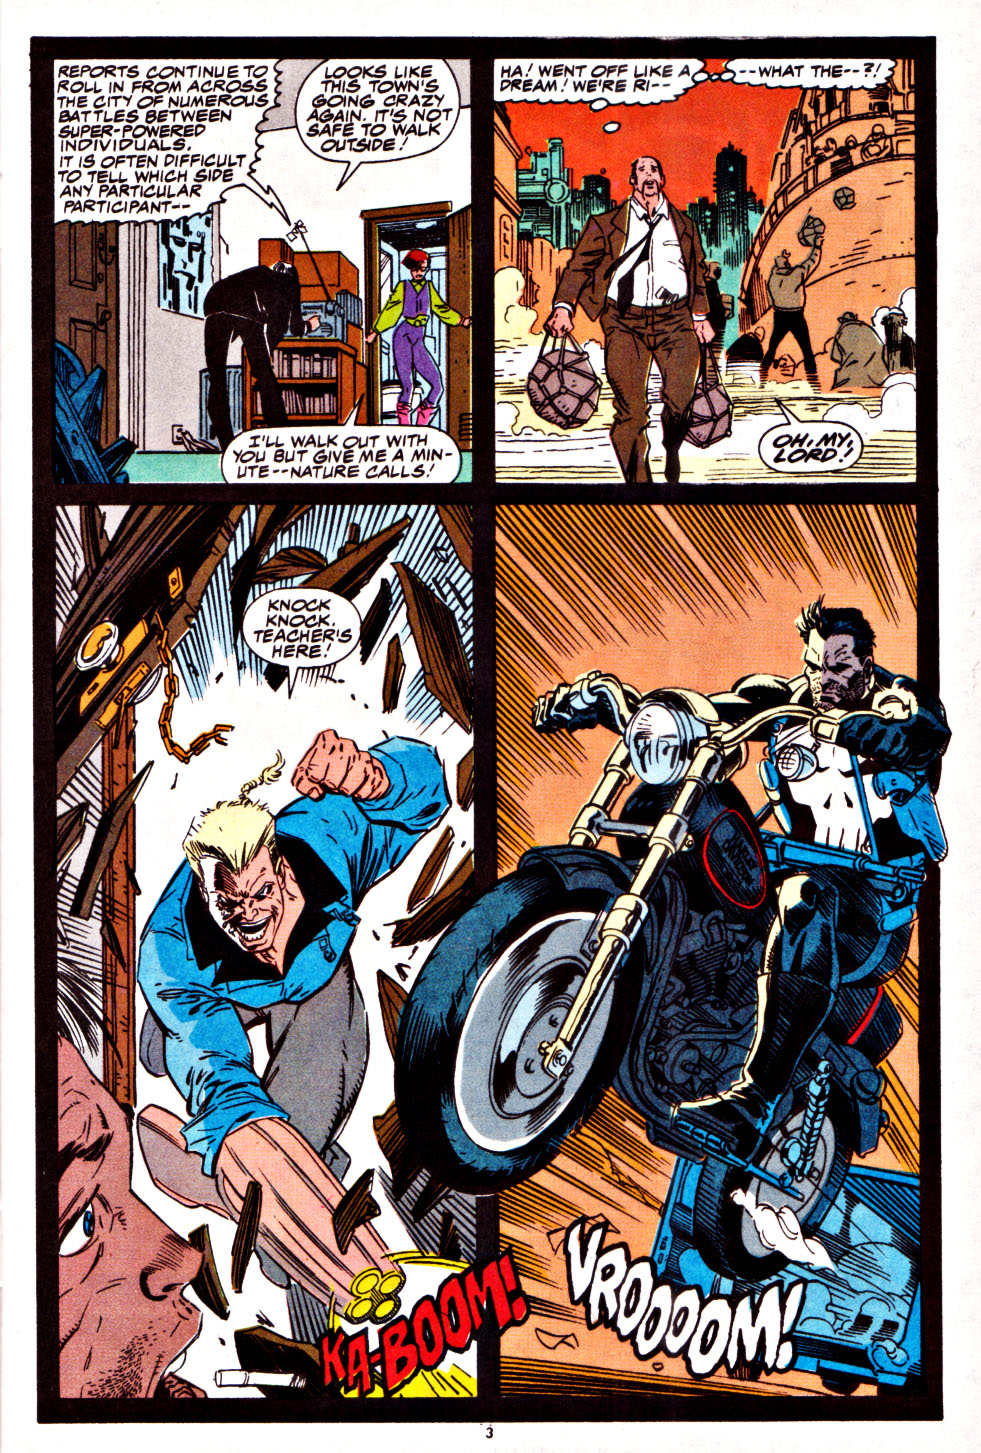 The Punisher War Journal #12 December 1989 Marvel Comics